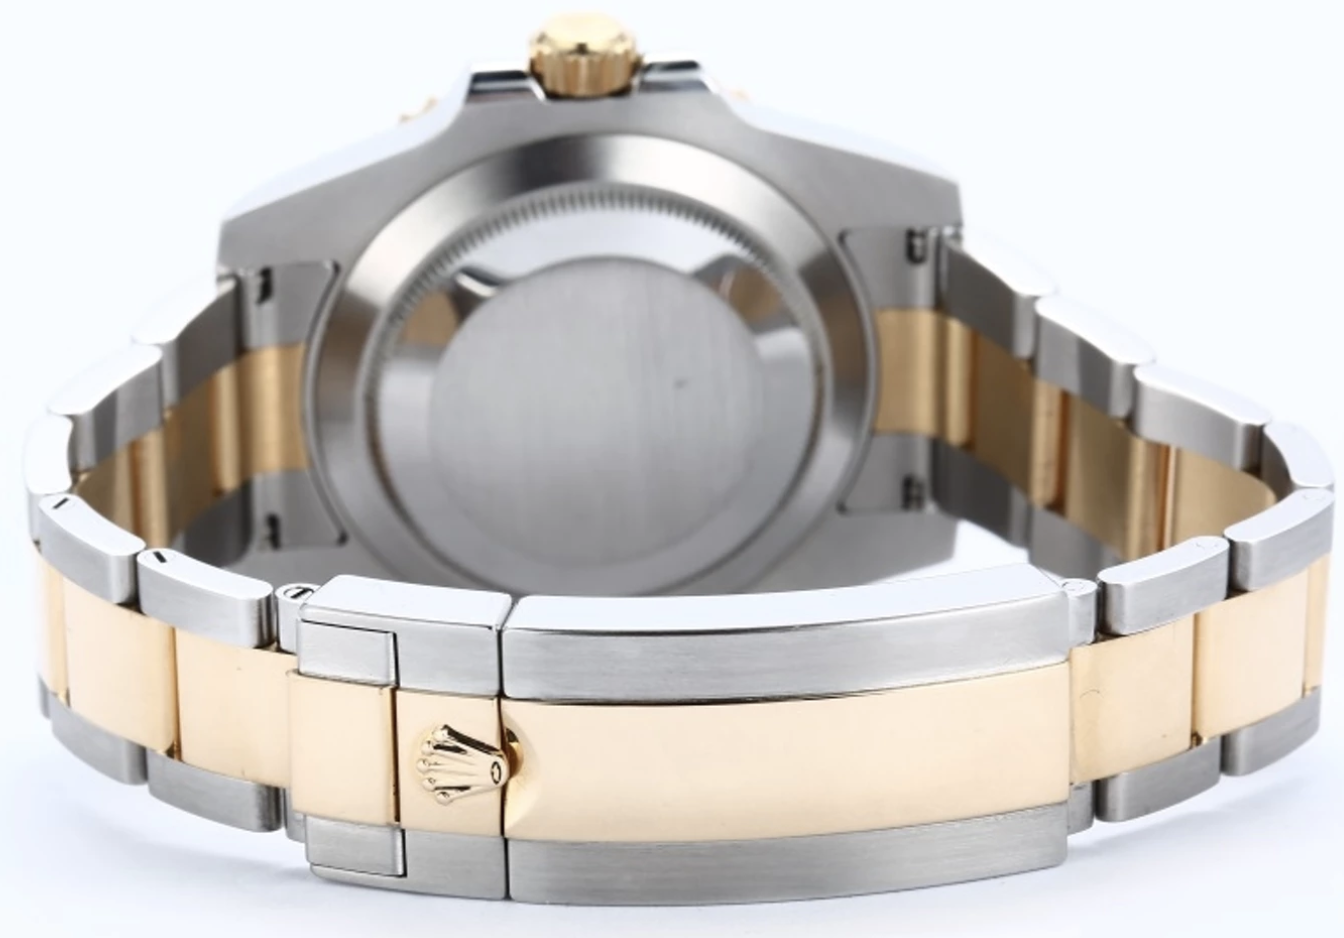 Replica Rolex Submariner - Silver/Gold - Replica Swiss Clones Watches